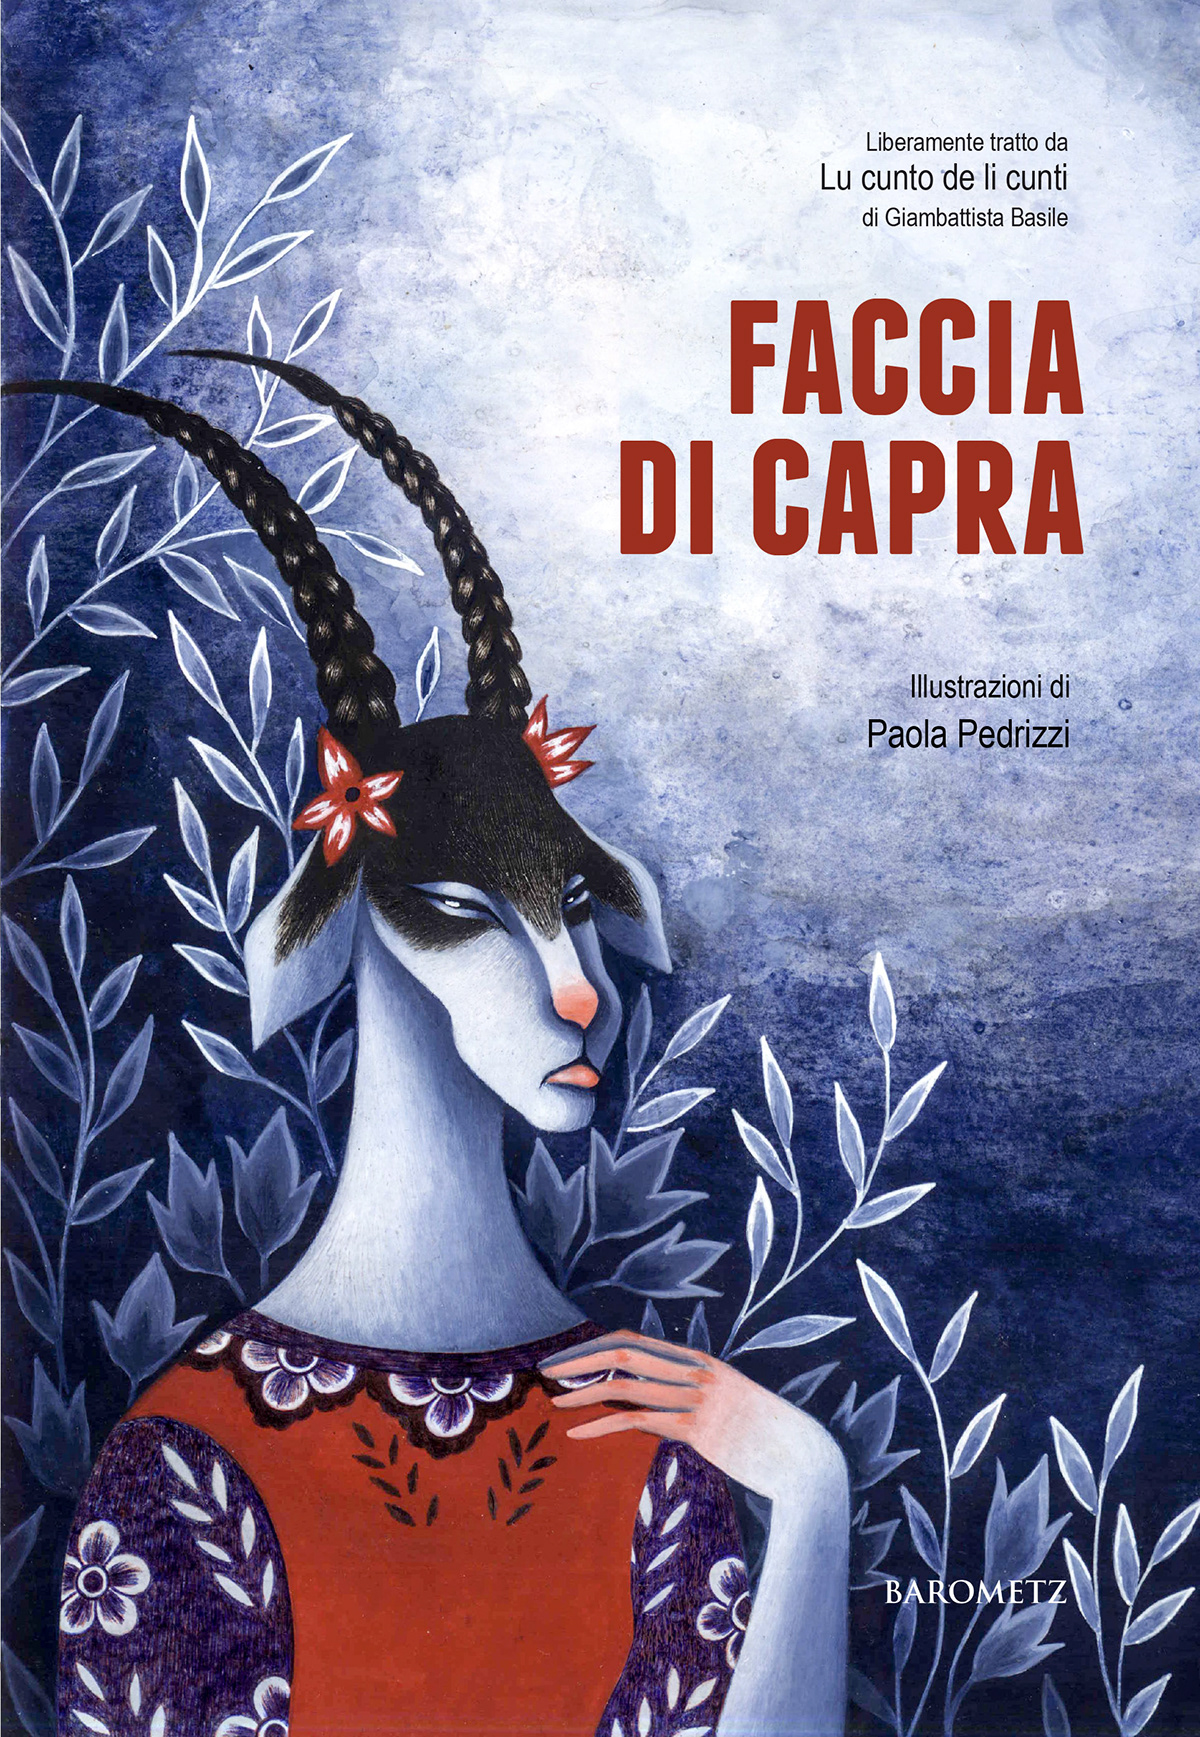 ILLUSTRATION  book illustrations classic tale italian illustrator inspire